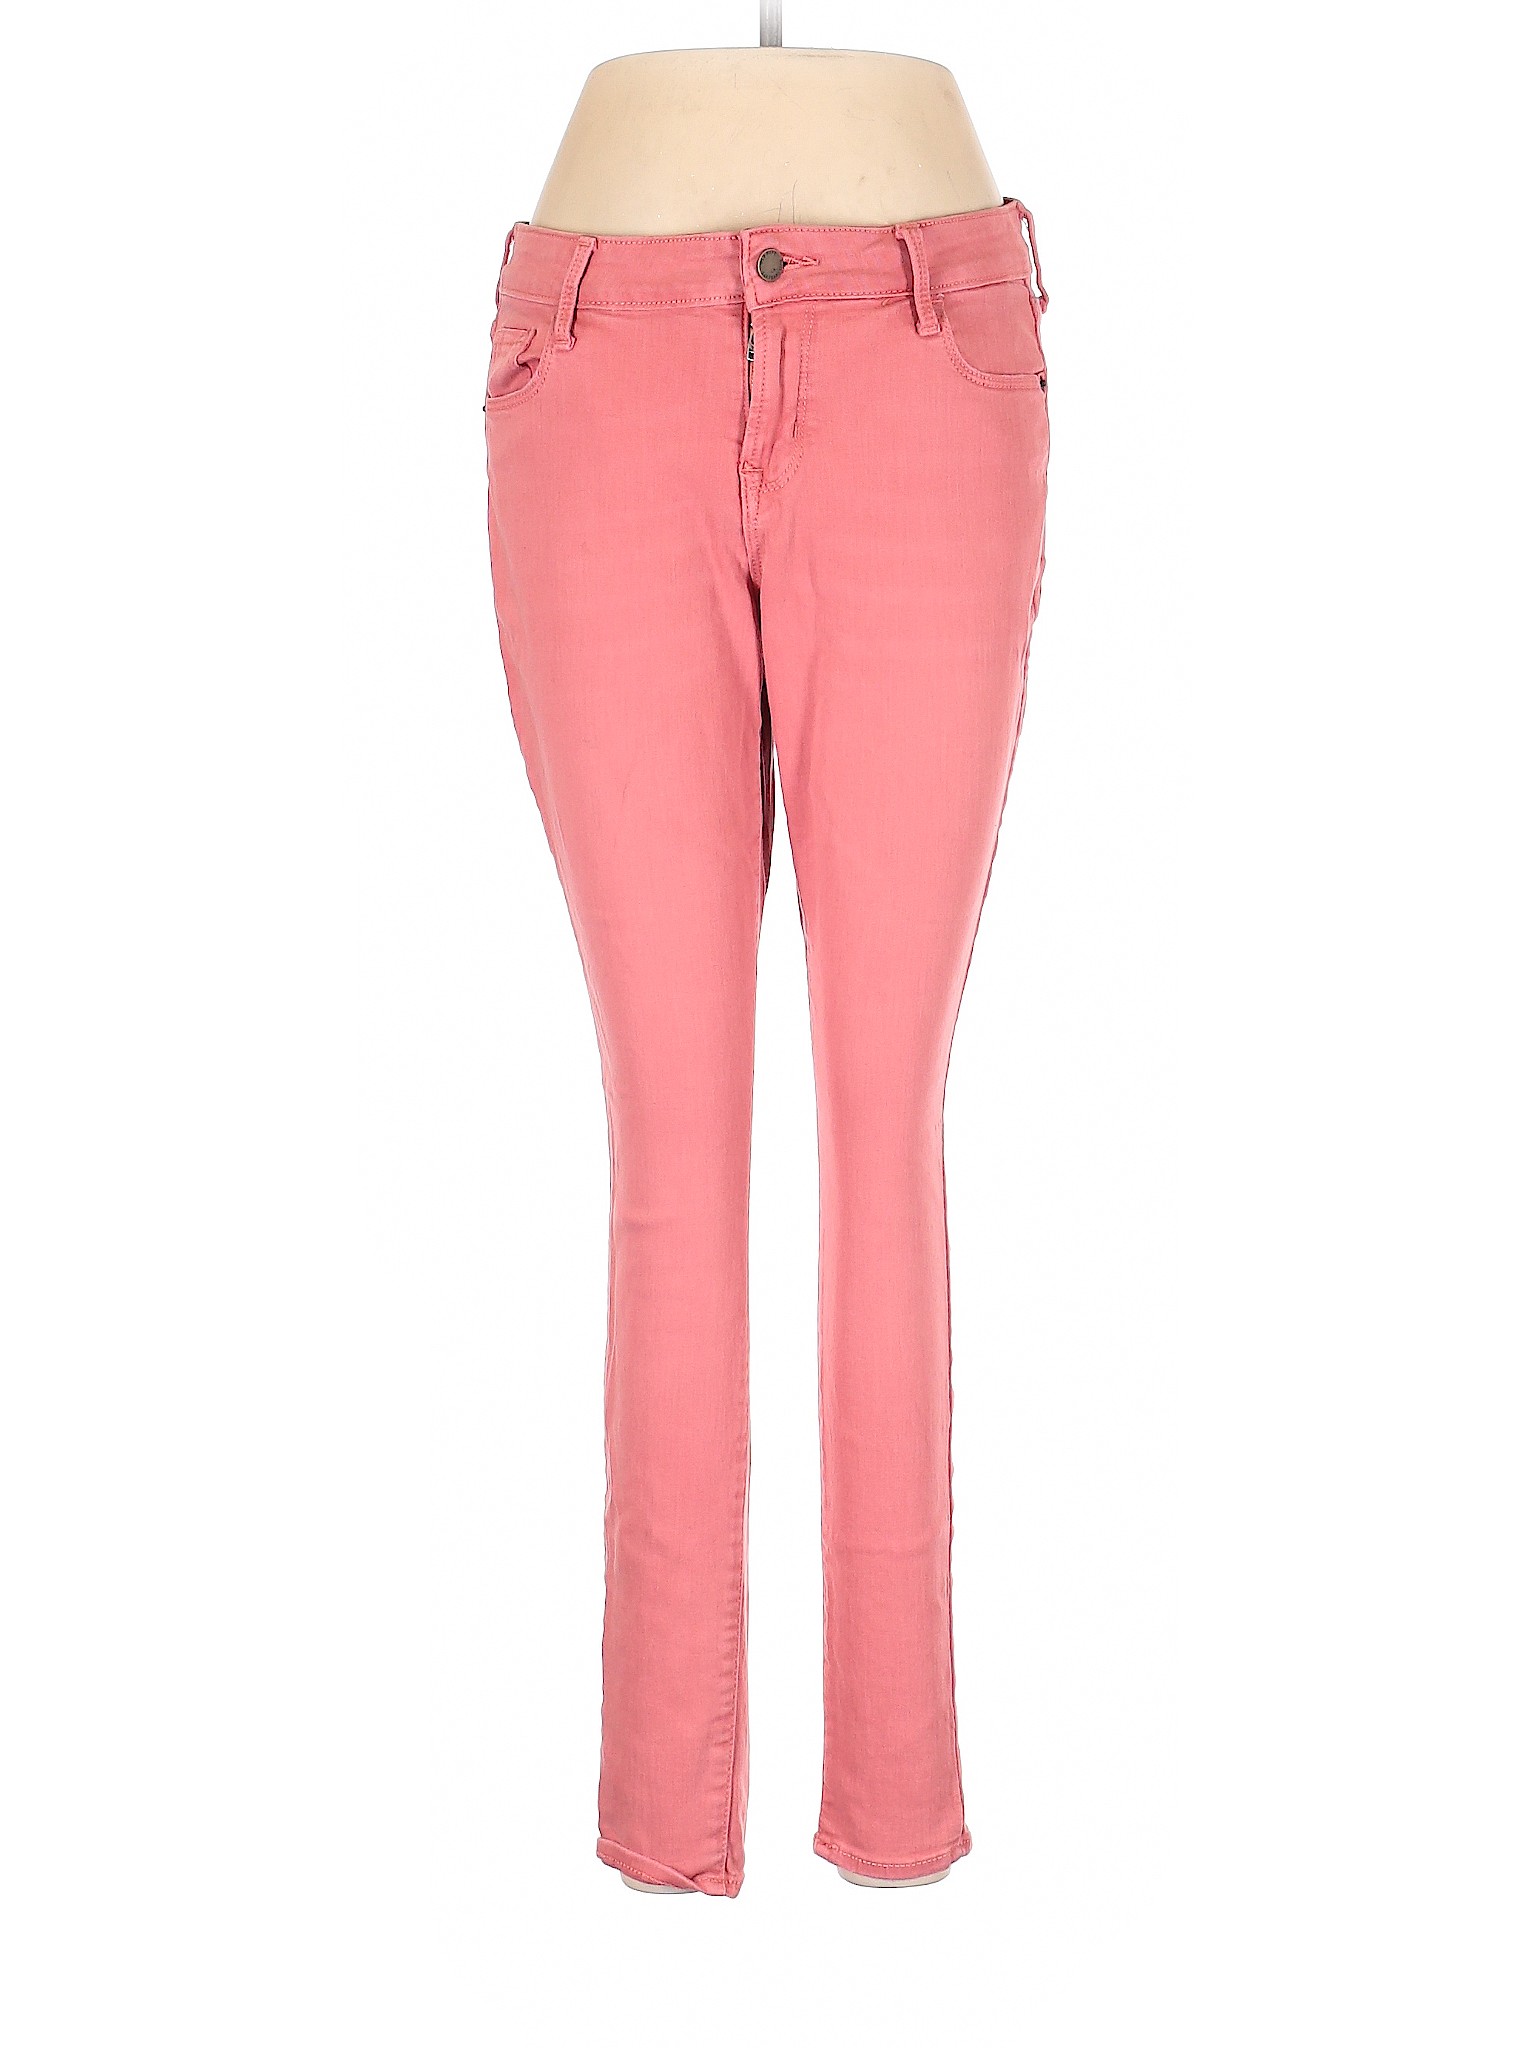 Old Navy Women Pink Casual Pants 6 Petites | eBay